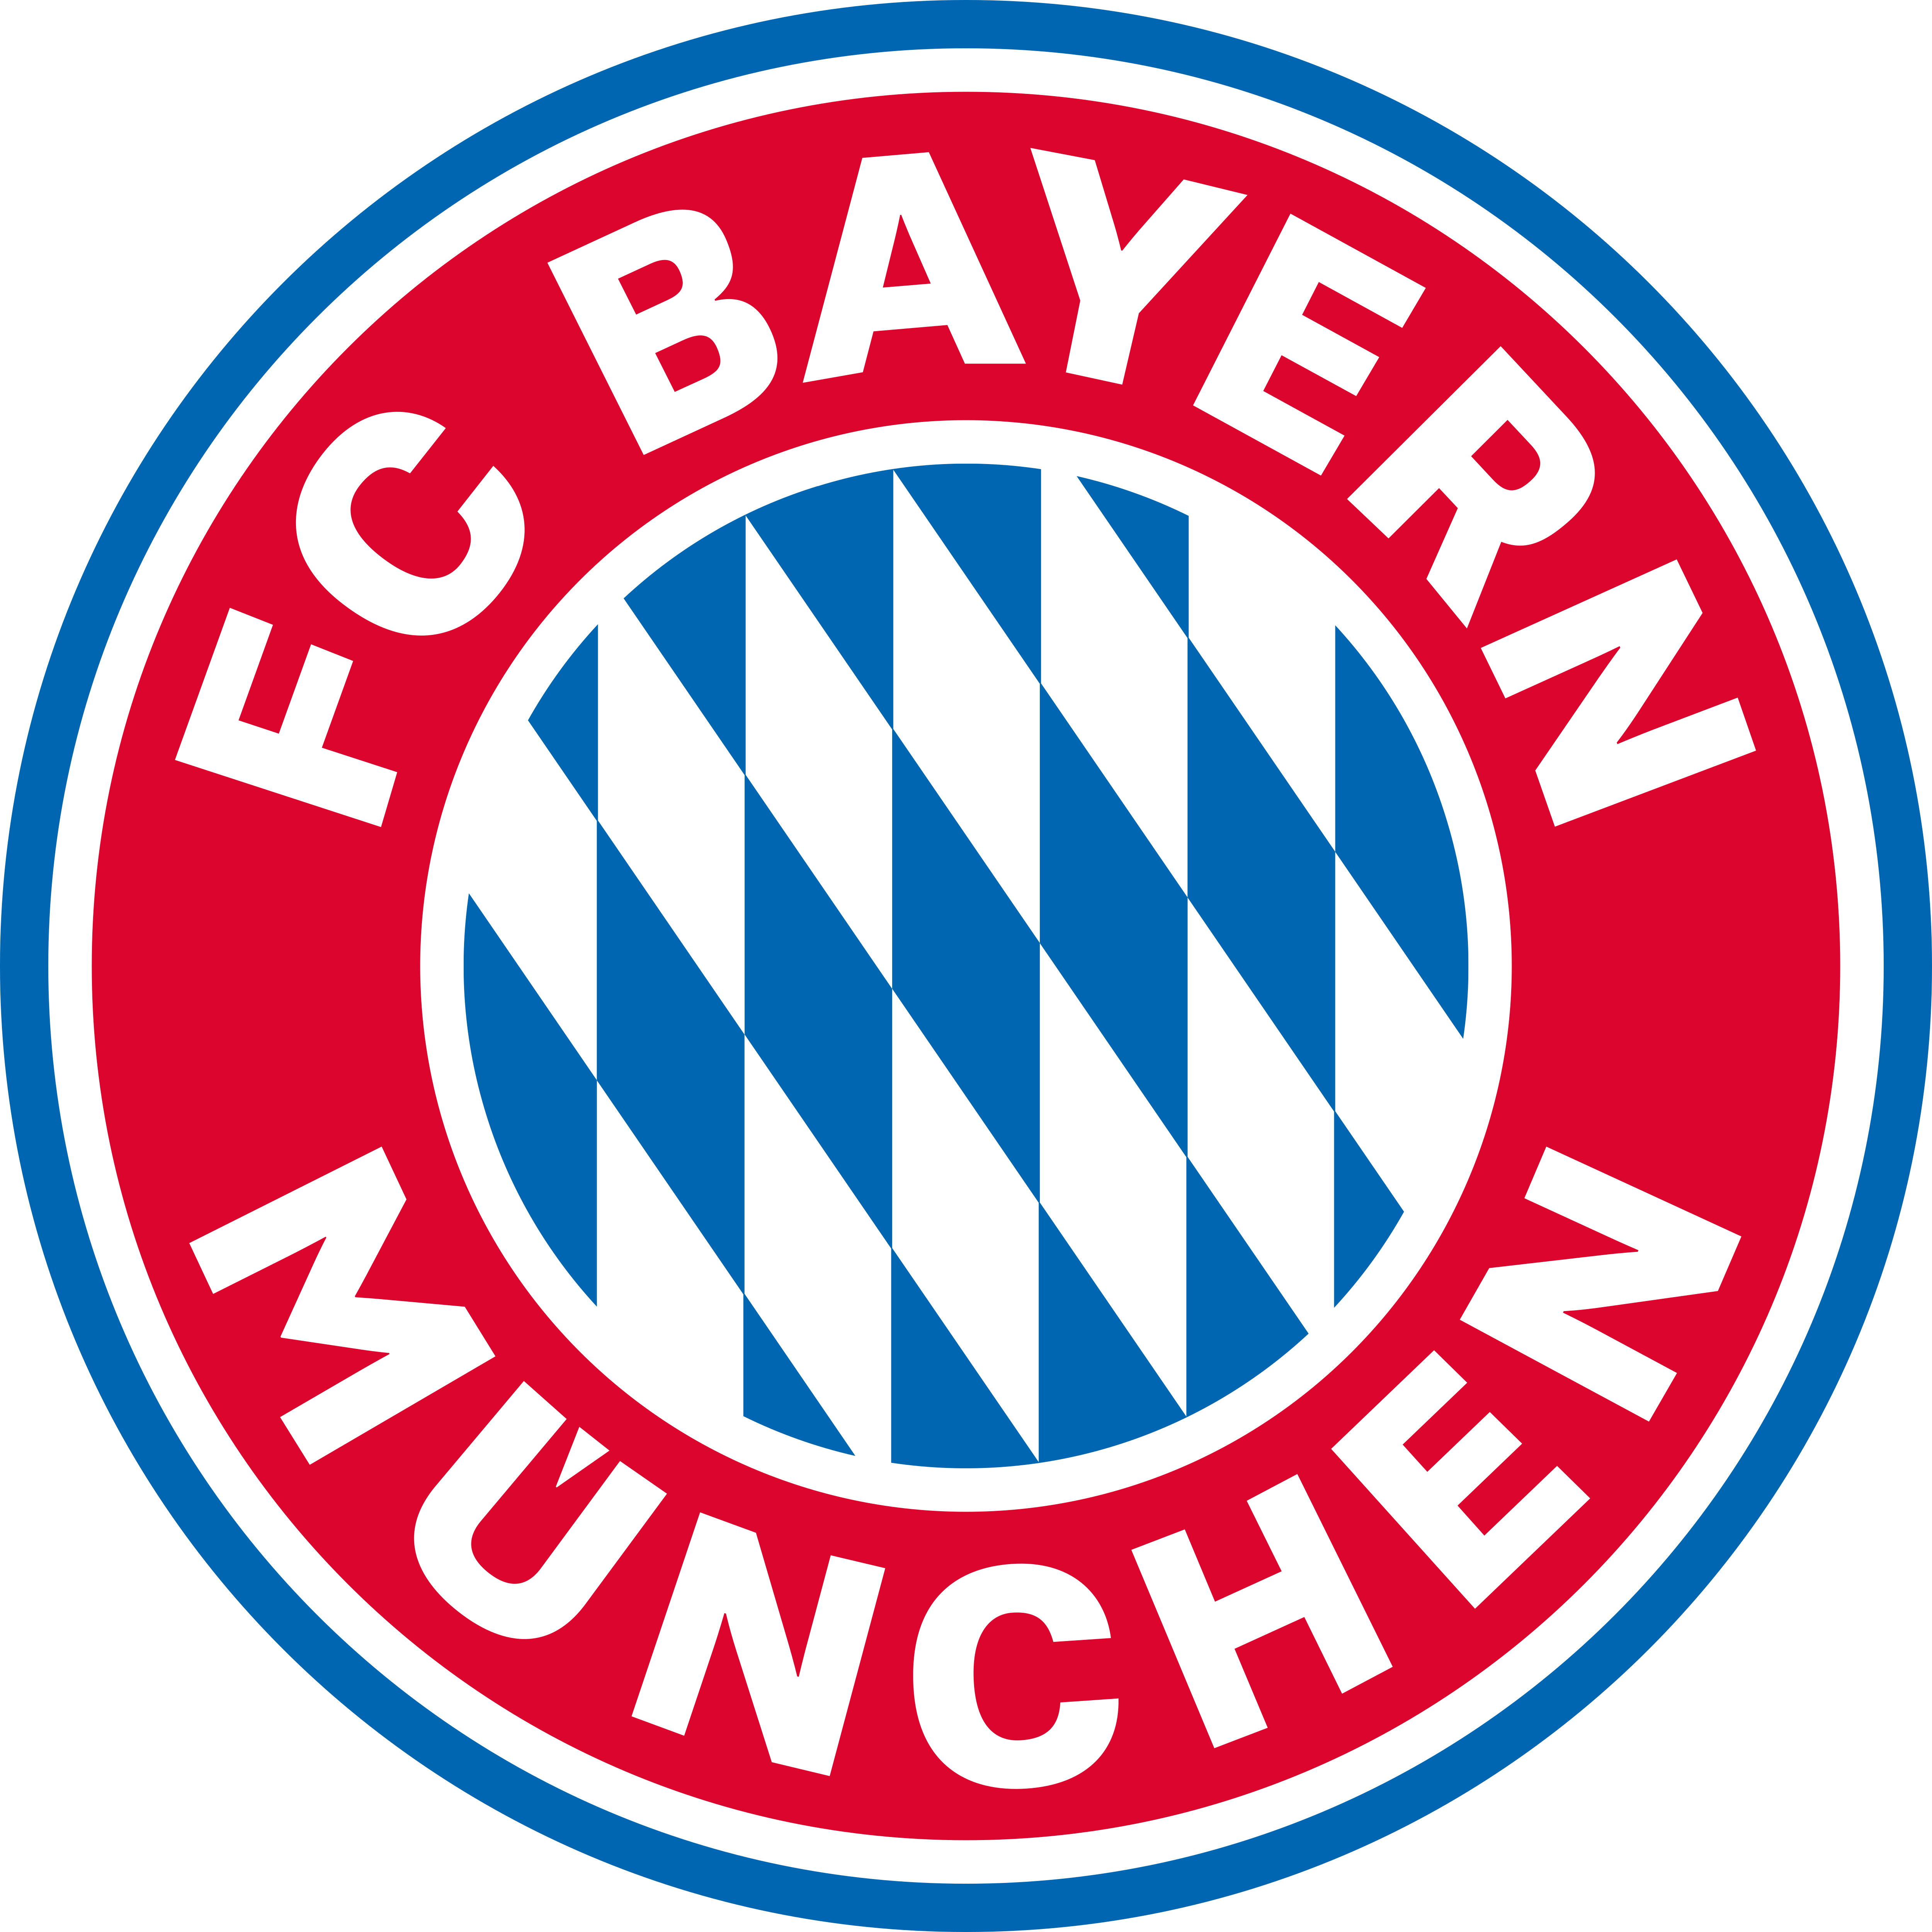 FC Bayern Munich – Logos Download